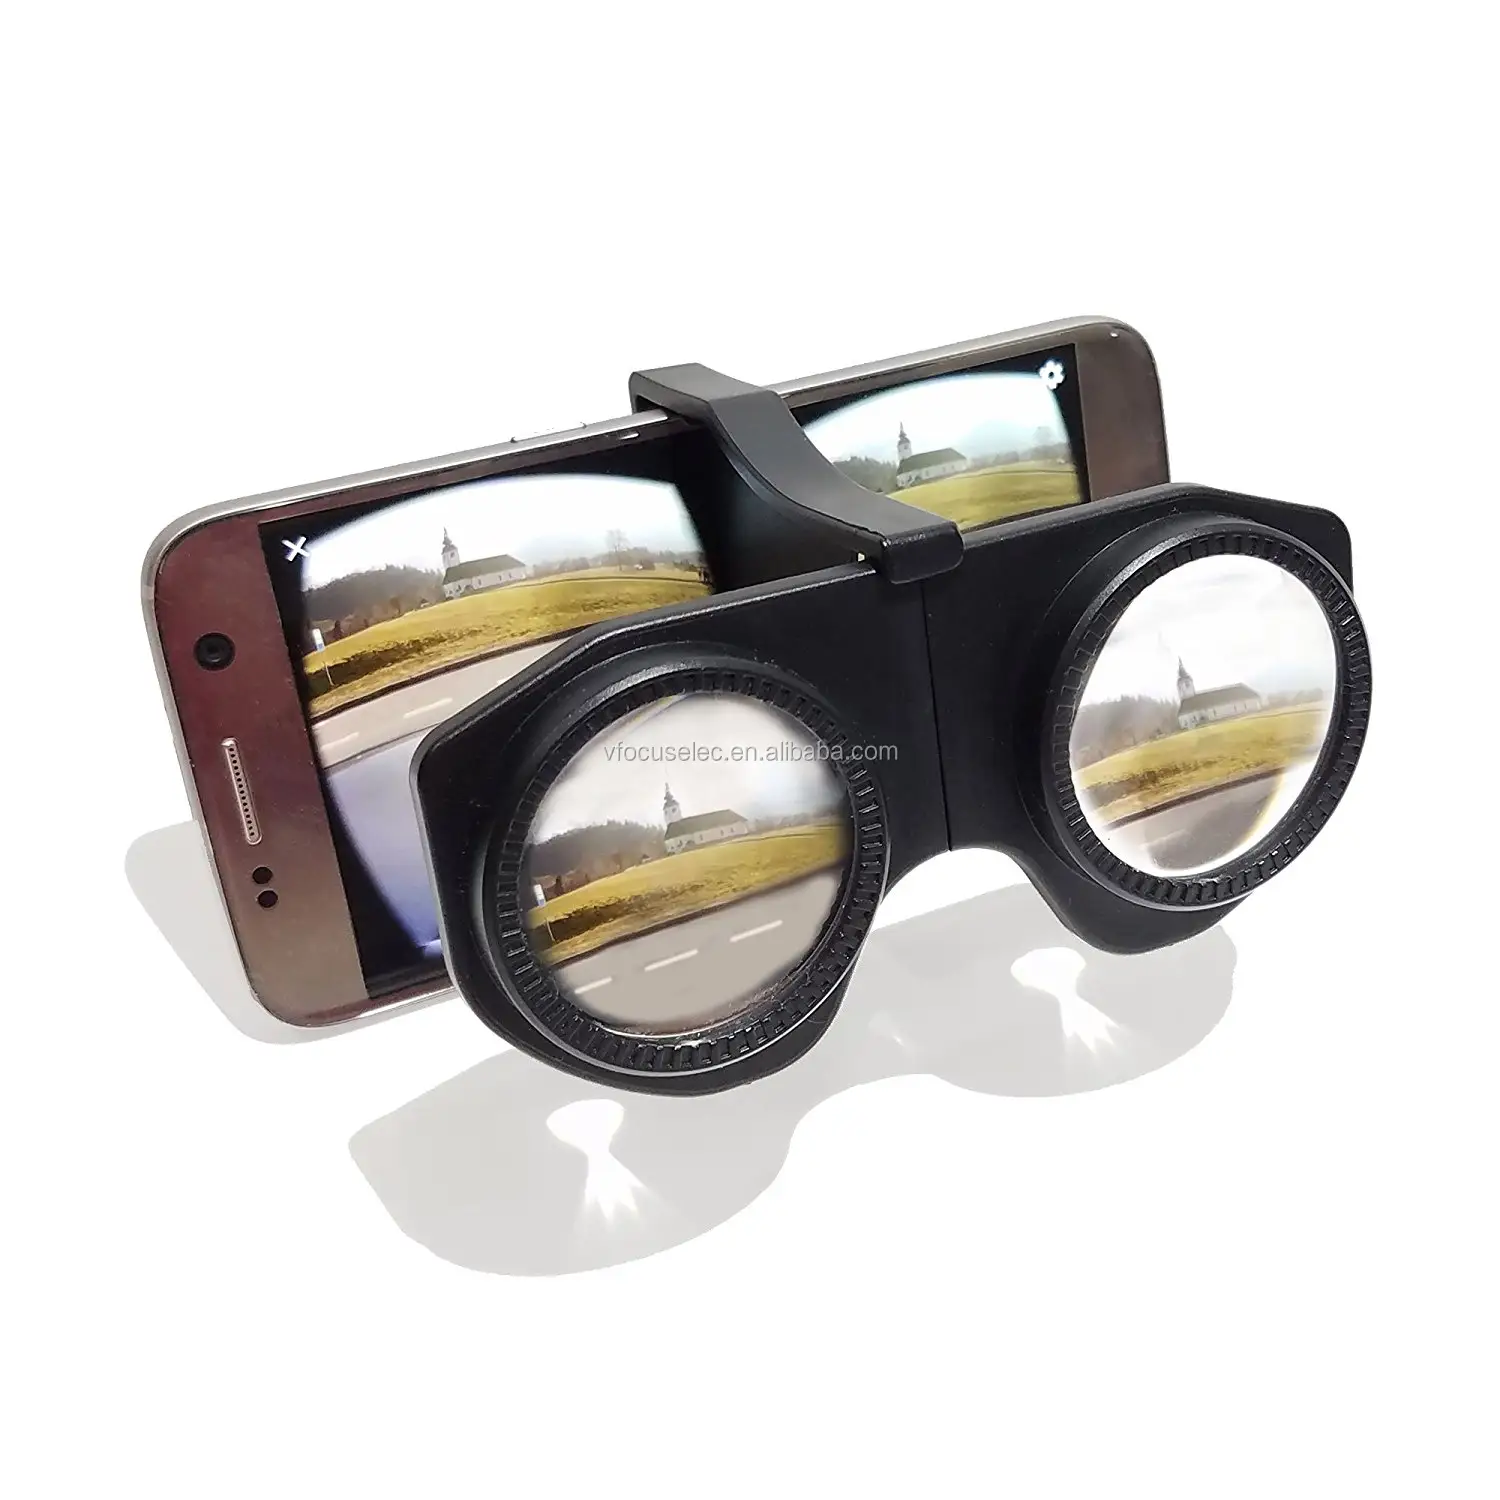 Mini Plastic Opvouwbare VR Bril met HD VR Lens, 3D Virtual Reality Headset Compatibel met Android & iOS Smartphones